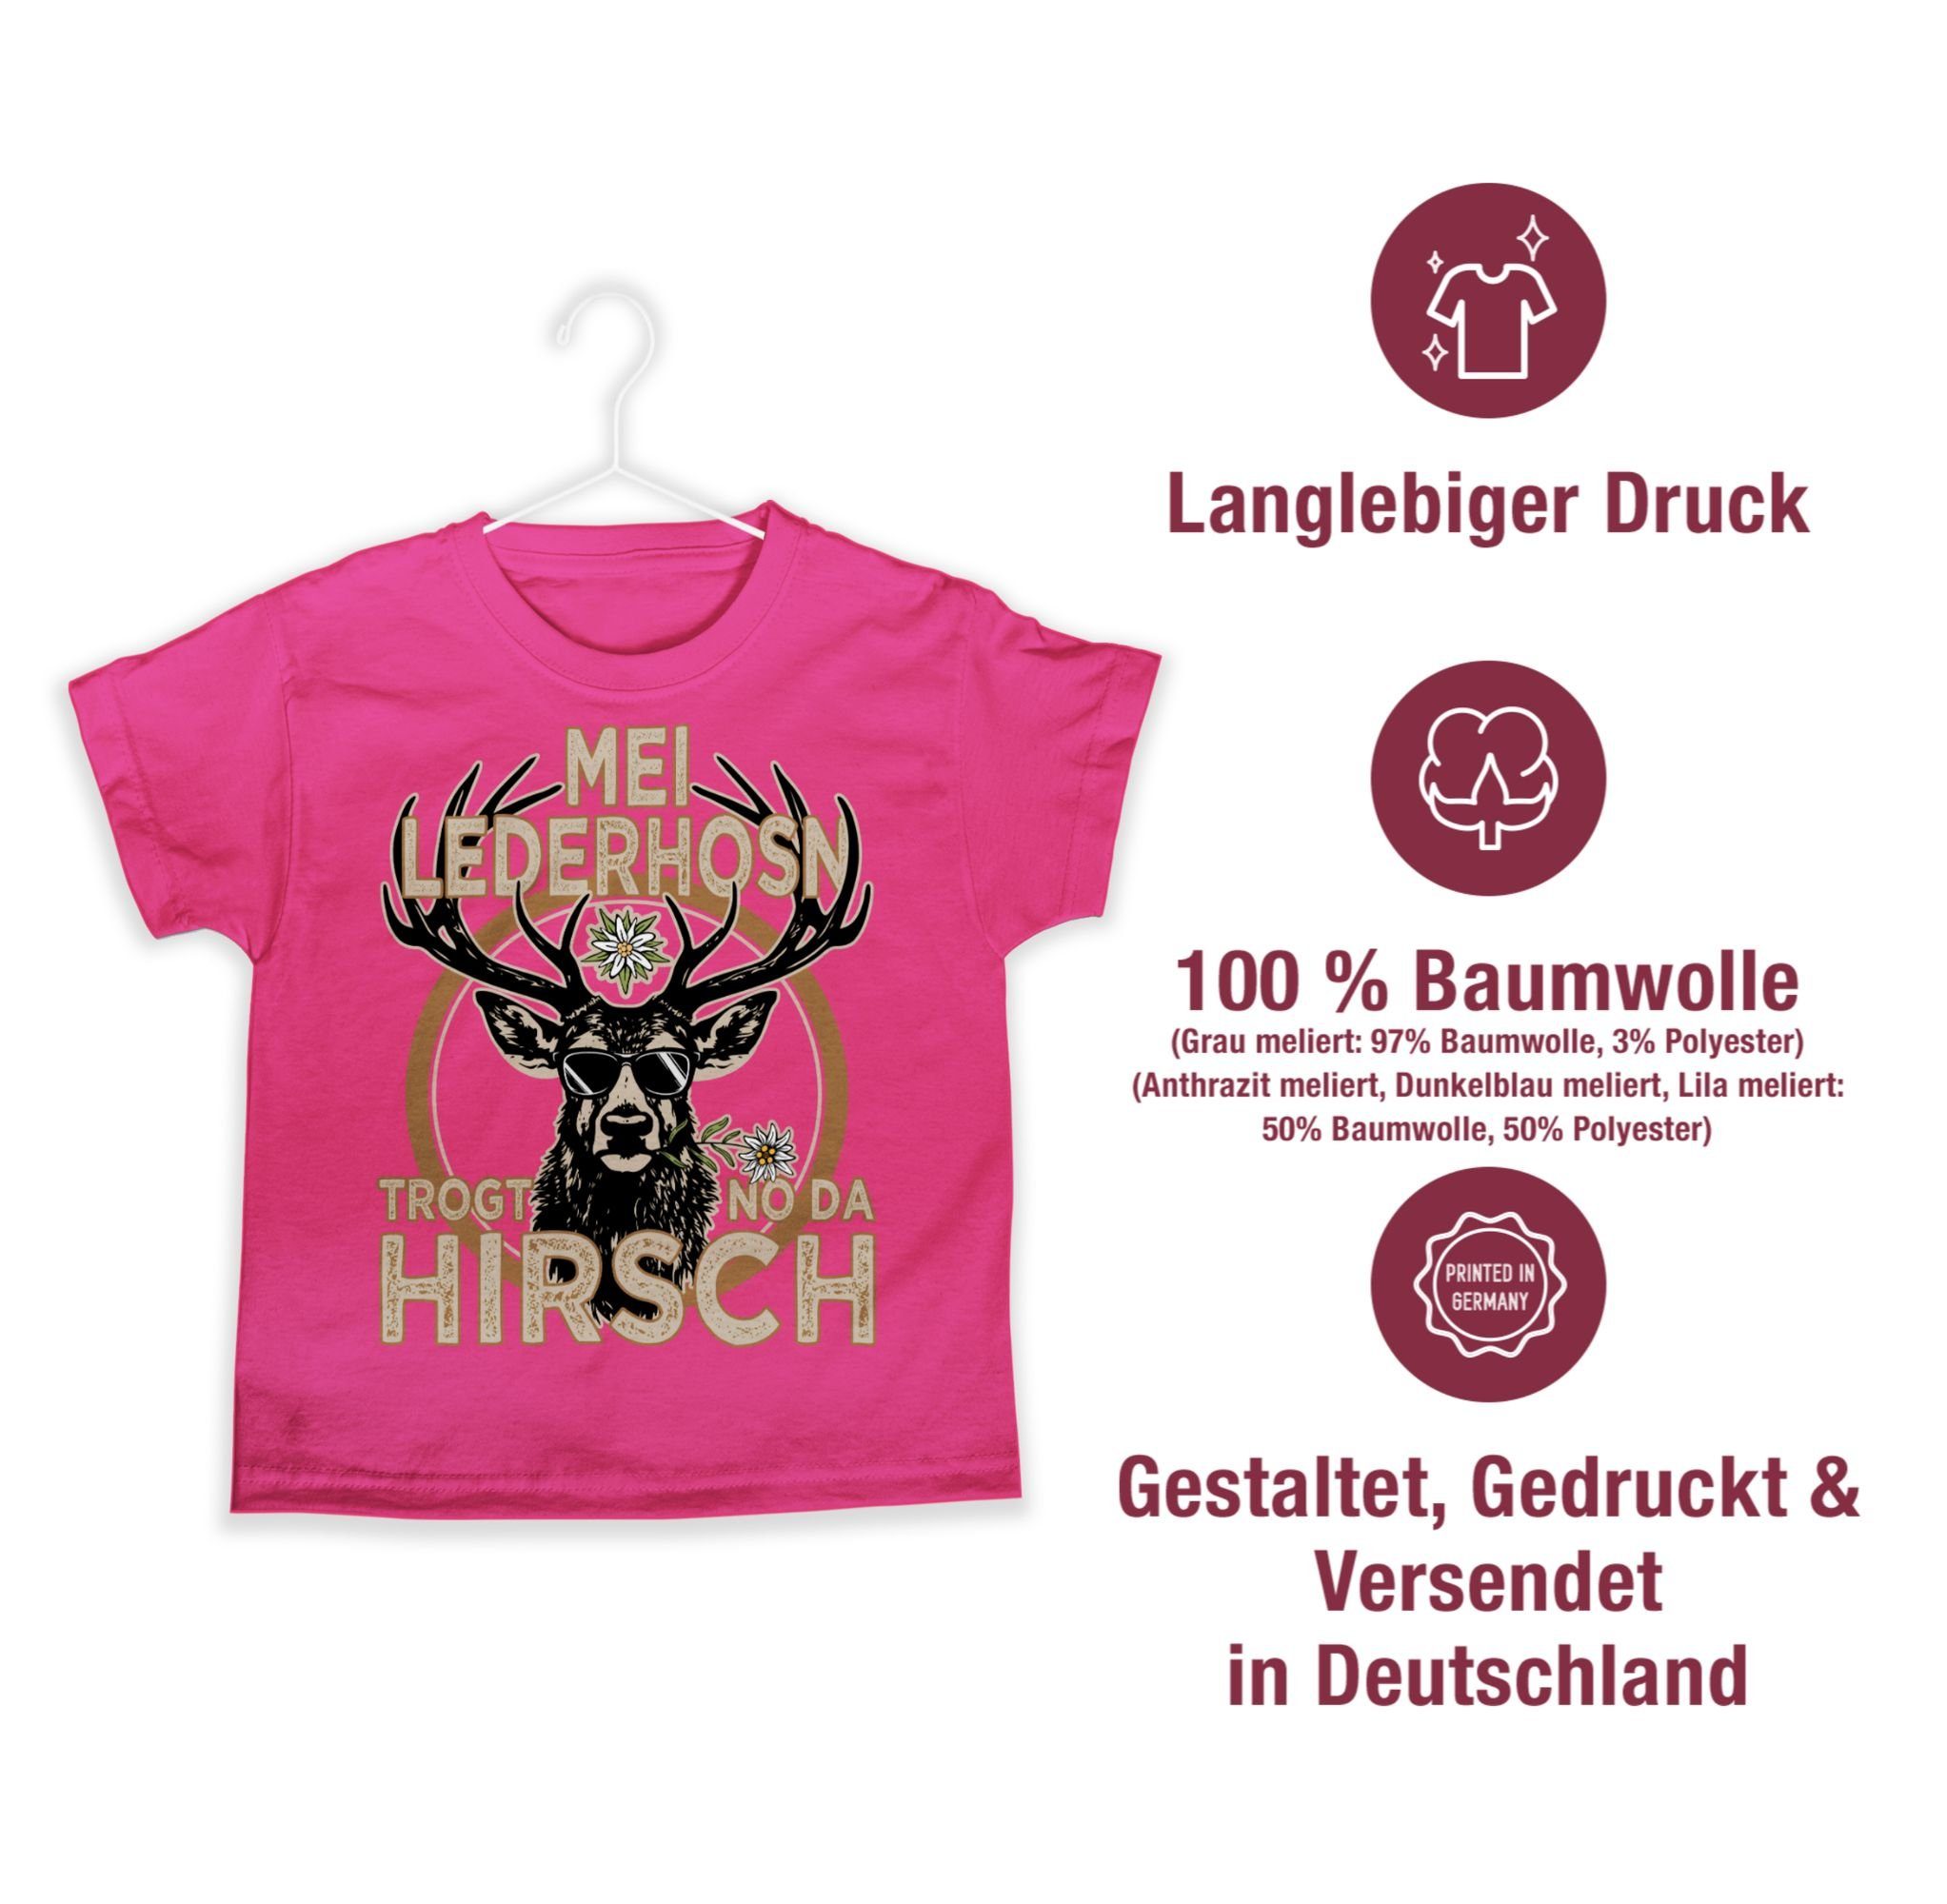 Lederhose Outfit 03 T-Shirt Spruch Hirsch für Kinder Trachten der Trägt Fuchsia Oktoberfest Shirtracer Outfit Mode